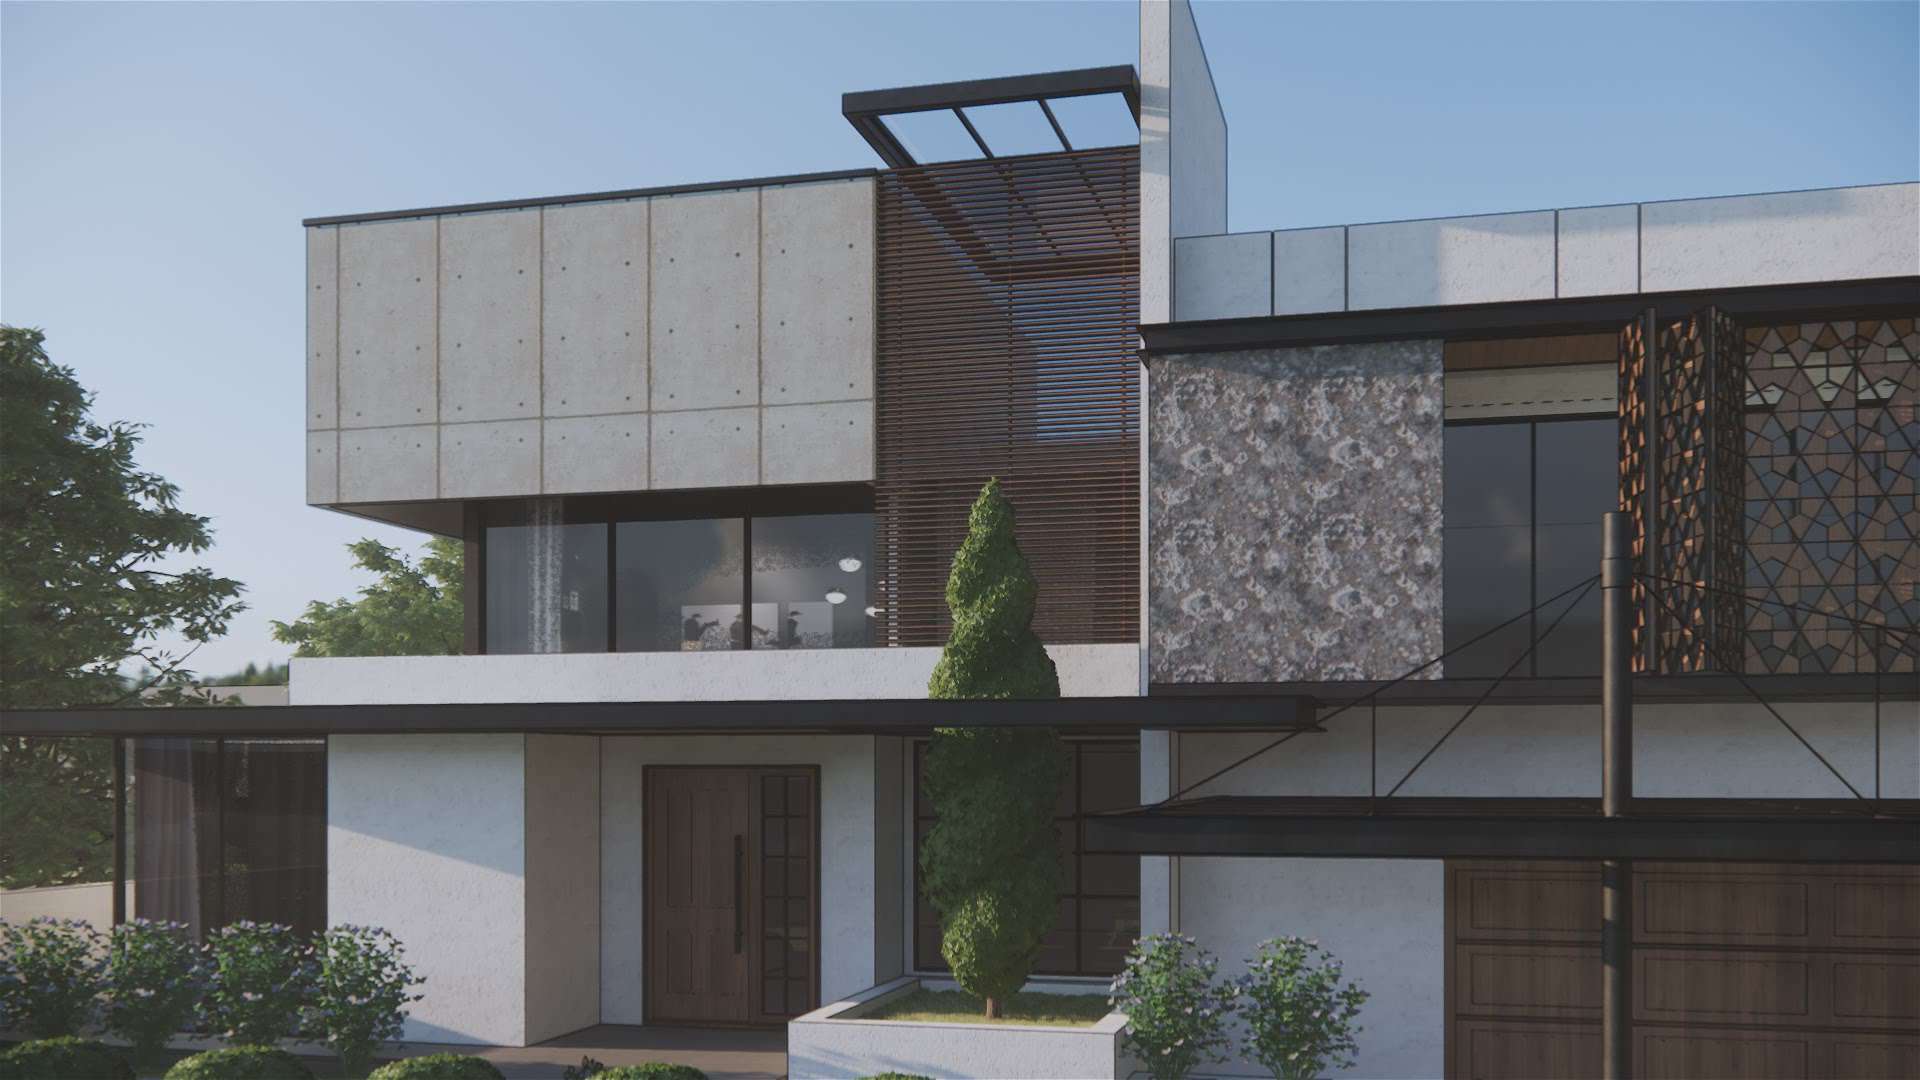 3d exterior elivation
#3d #3D_ELEVATION #exteriordesigns